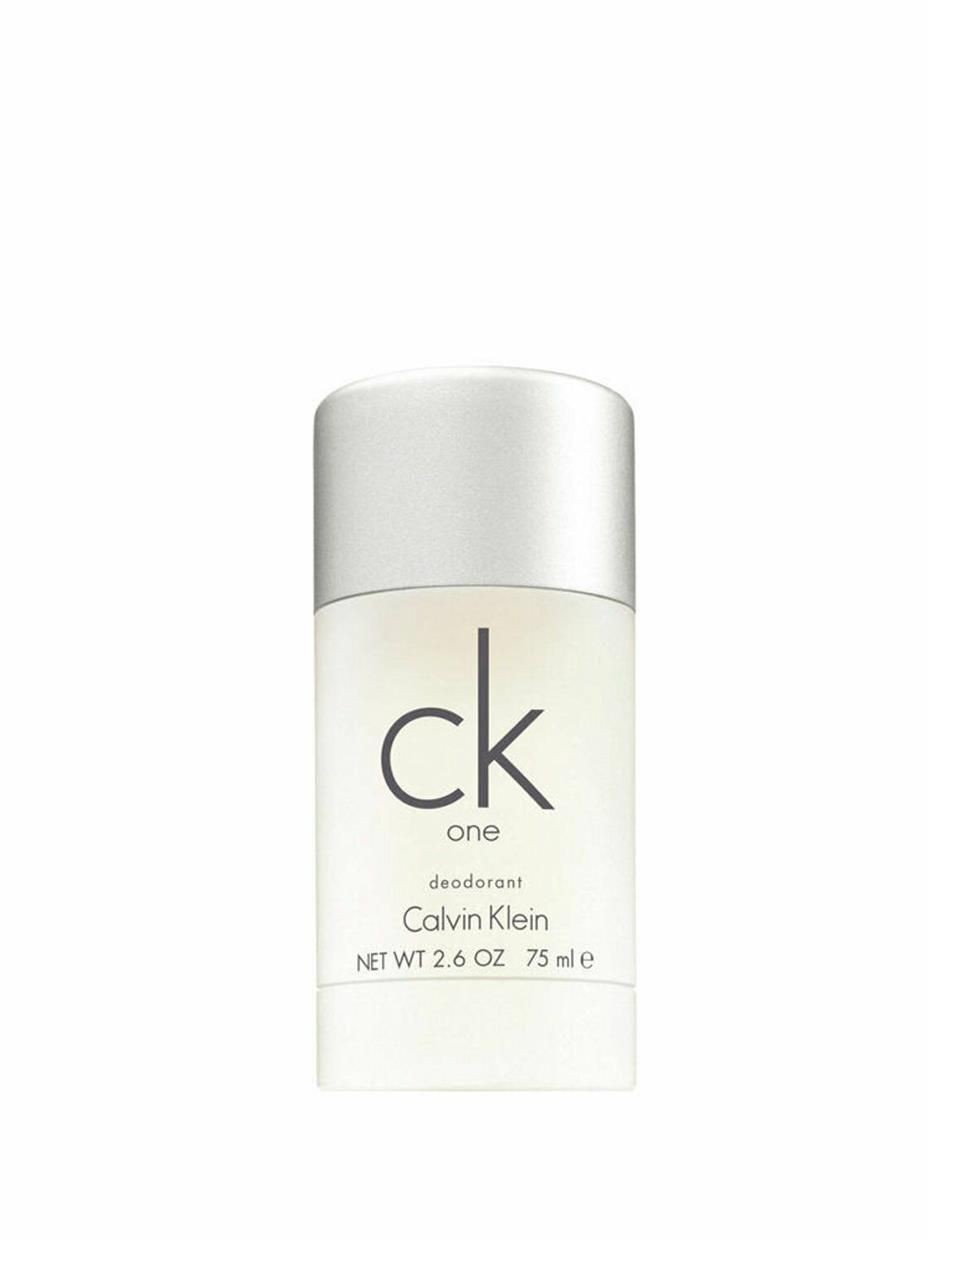 CK One Deodorant Stick 75 ml